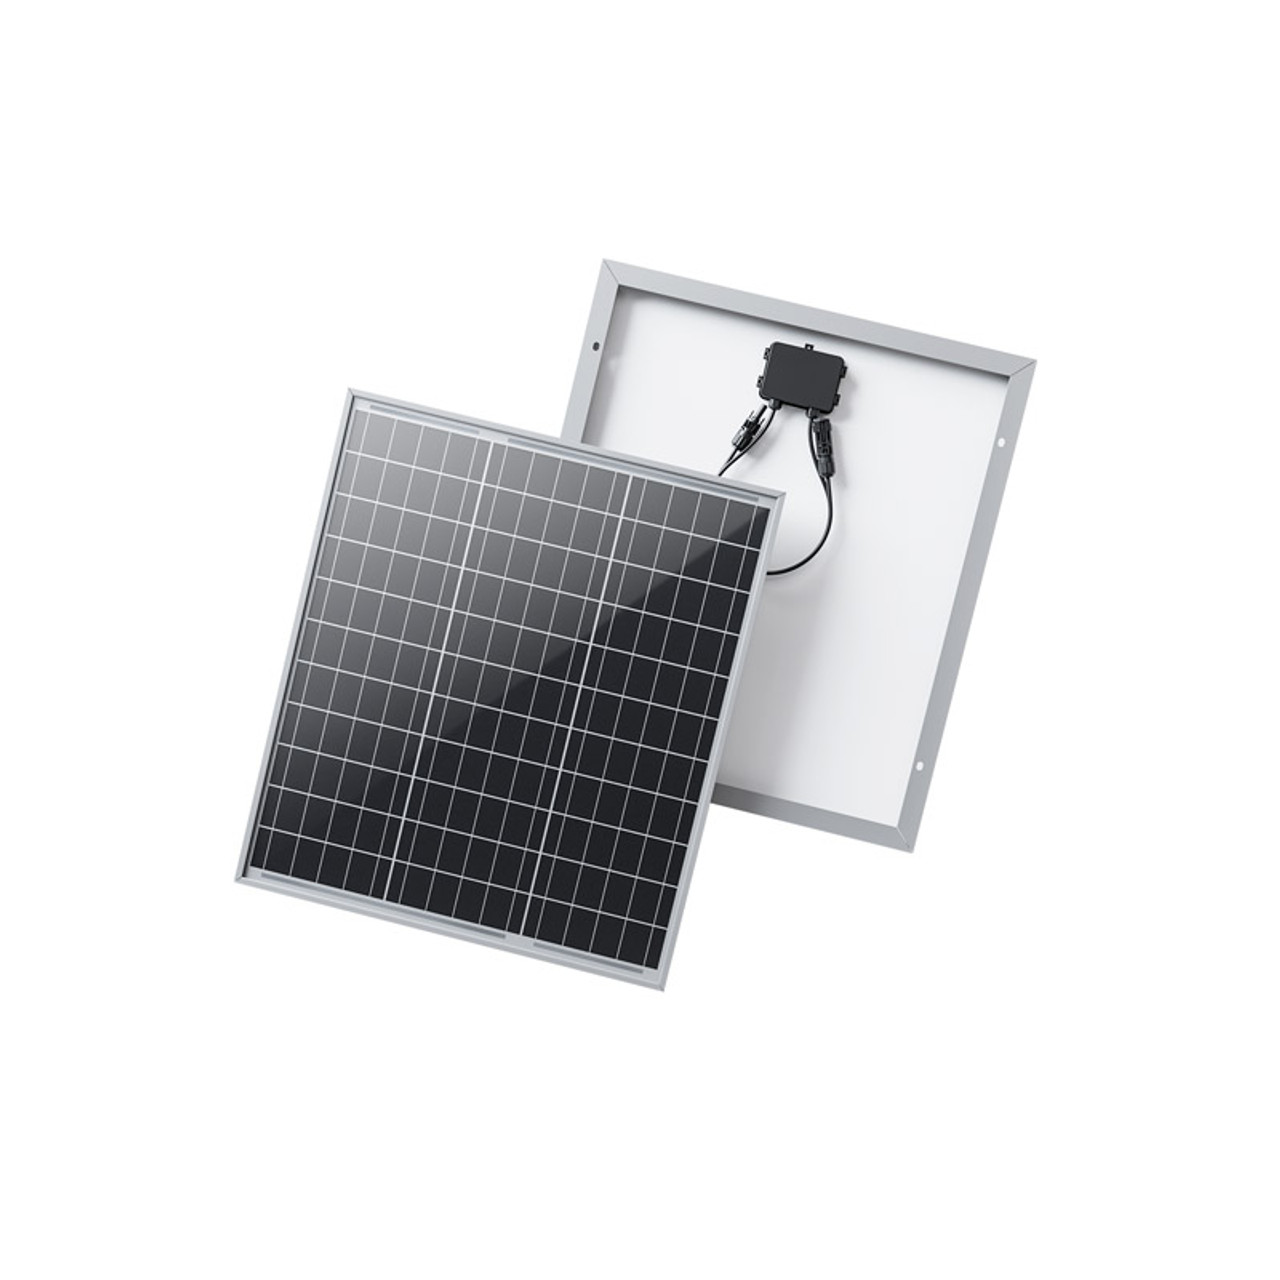 Higon Off Grid Small Solar Panel 10W 50W 100W 150W 200W for Small Solar Kit